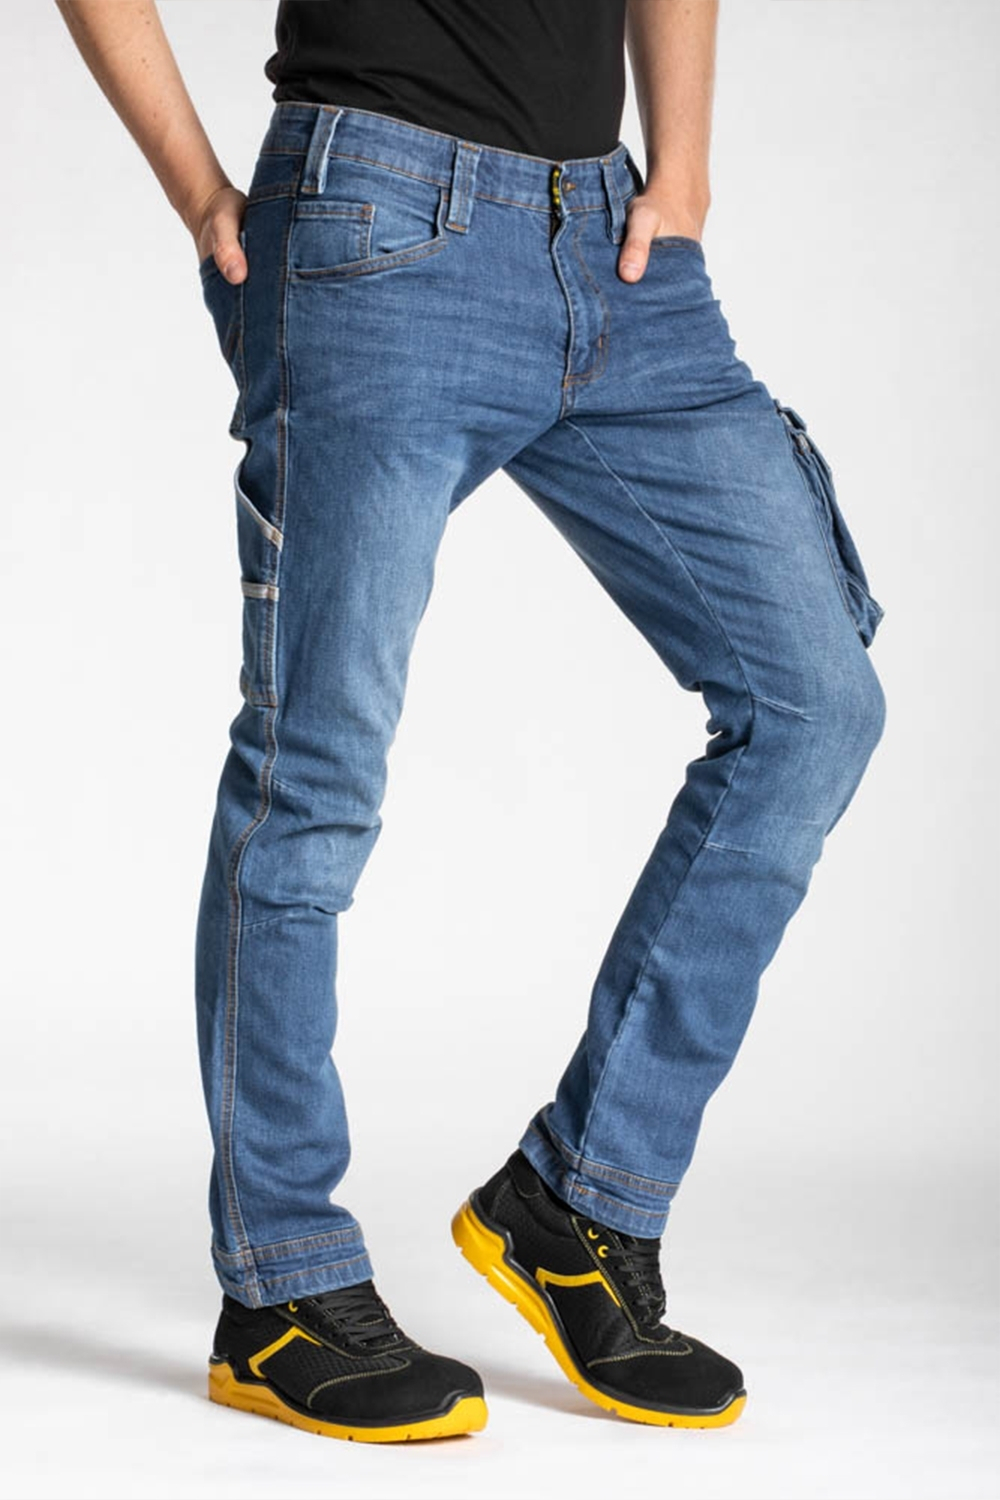 Rica Lewis Kalhoty do pasu RICA LEWIS JOB jeans vel.50